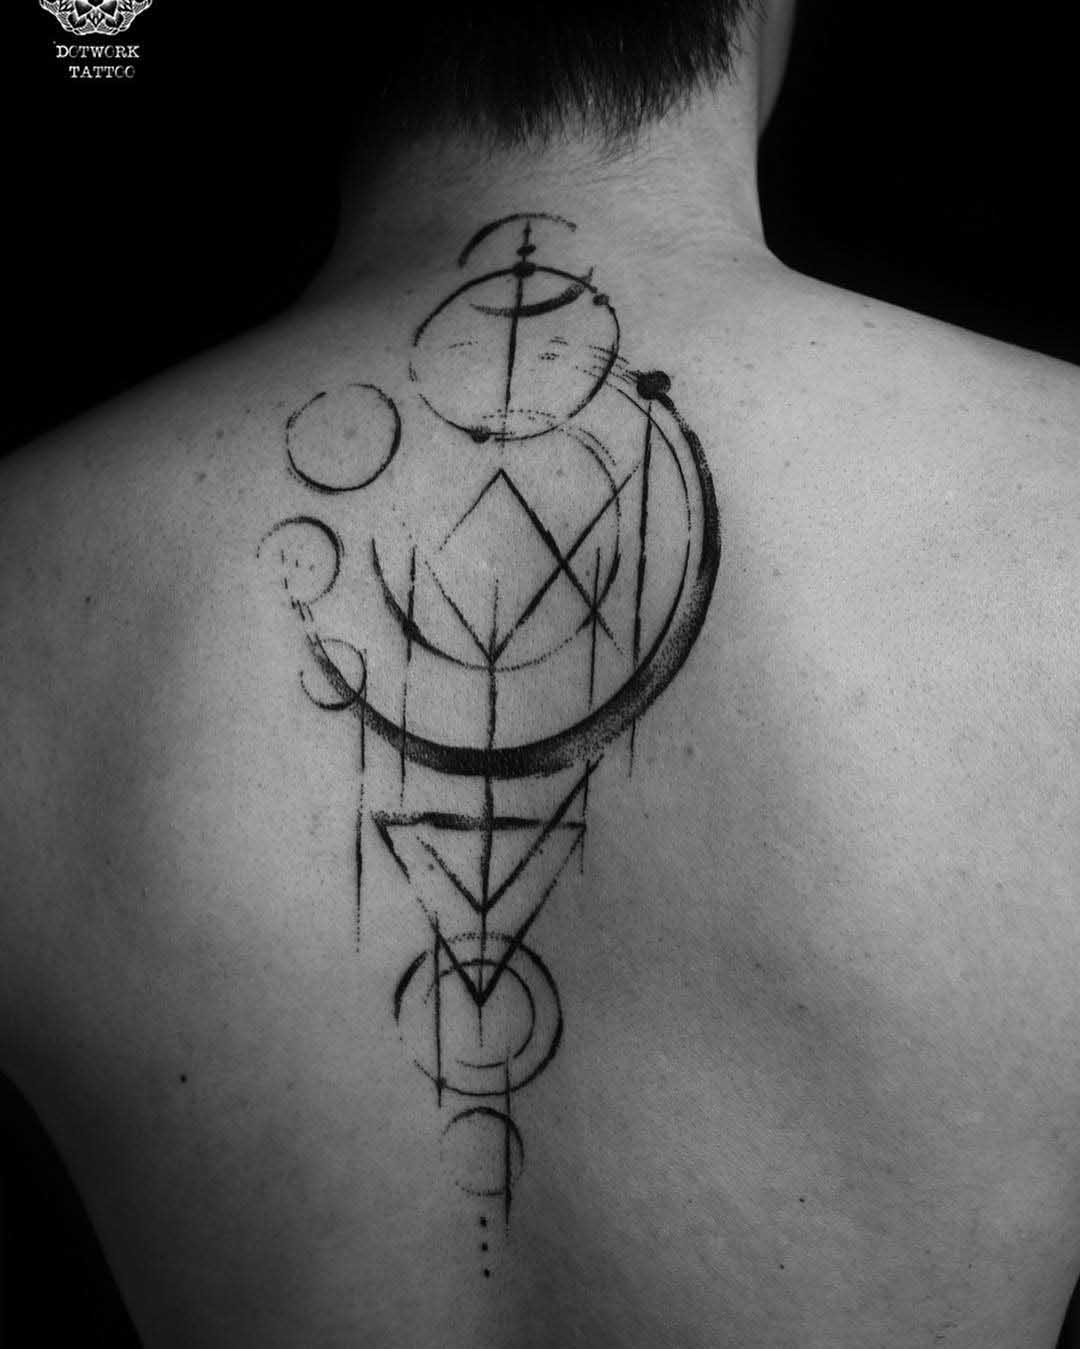 Spine tattoos - Best Tattoo Ideas Gallery